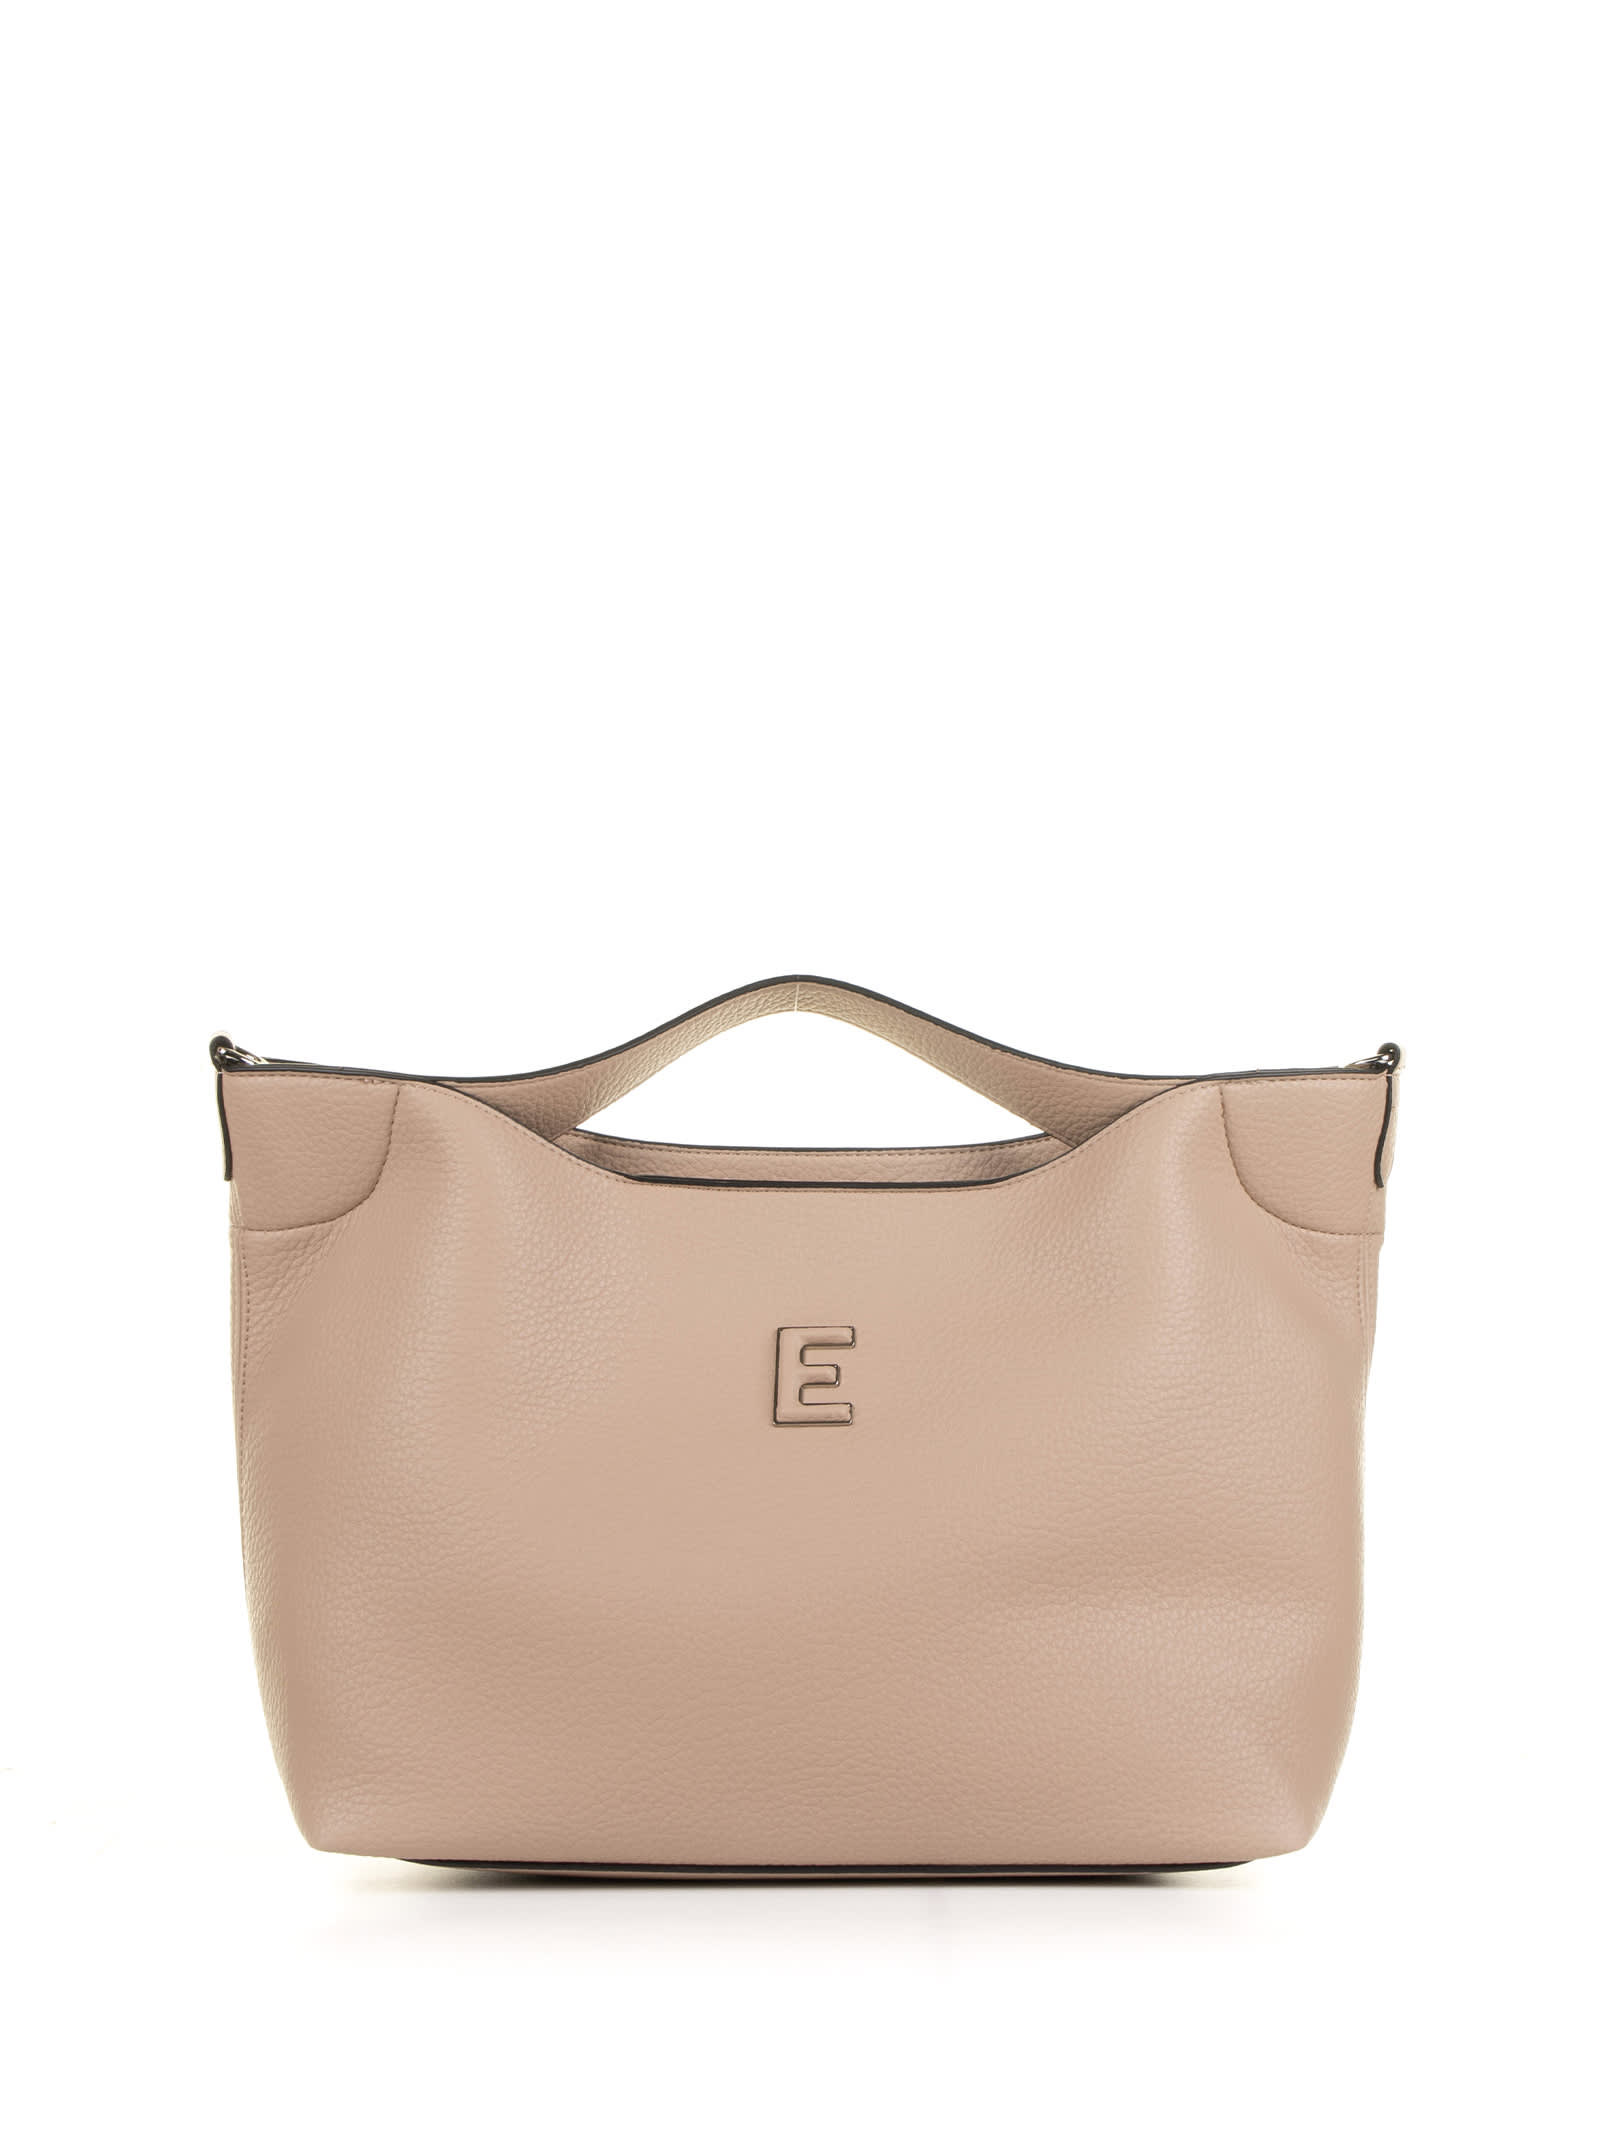 Rachele Small Powder Pink Leather Handbag